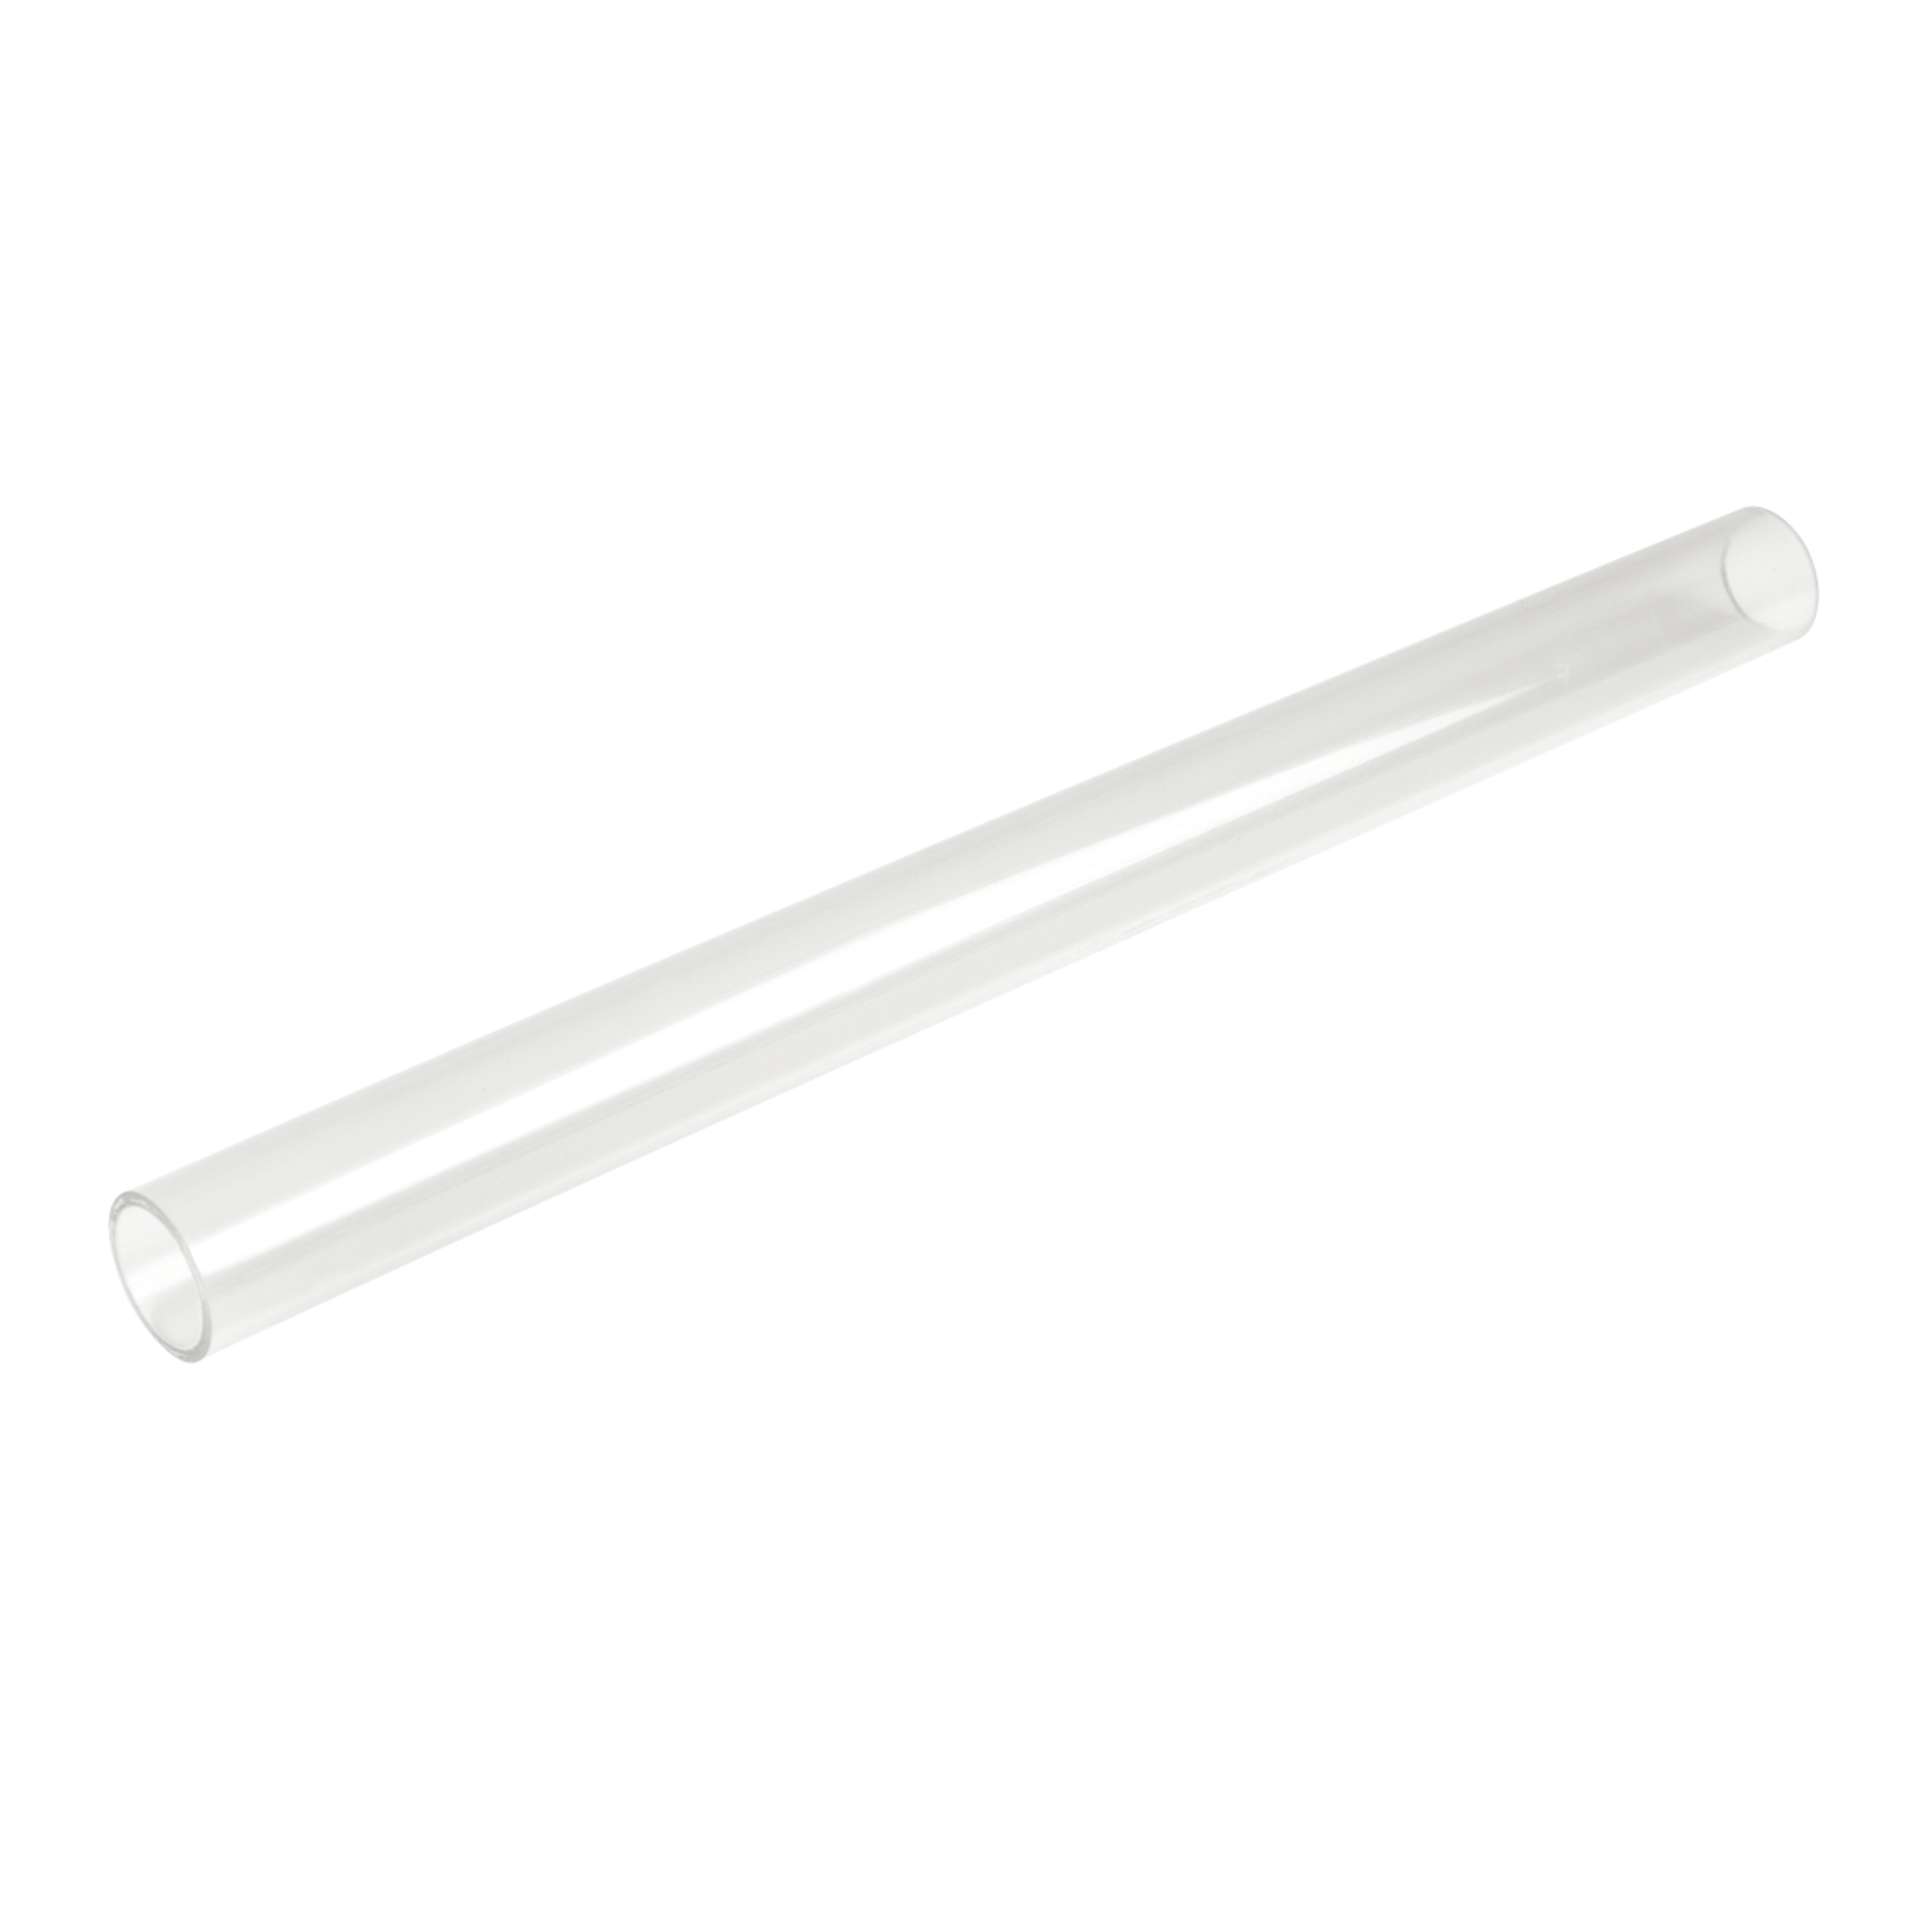 PVC Rohr transparent 110 mm, d=110 mm, Wandstärke 5,3 mm, Meterware